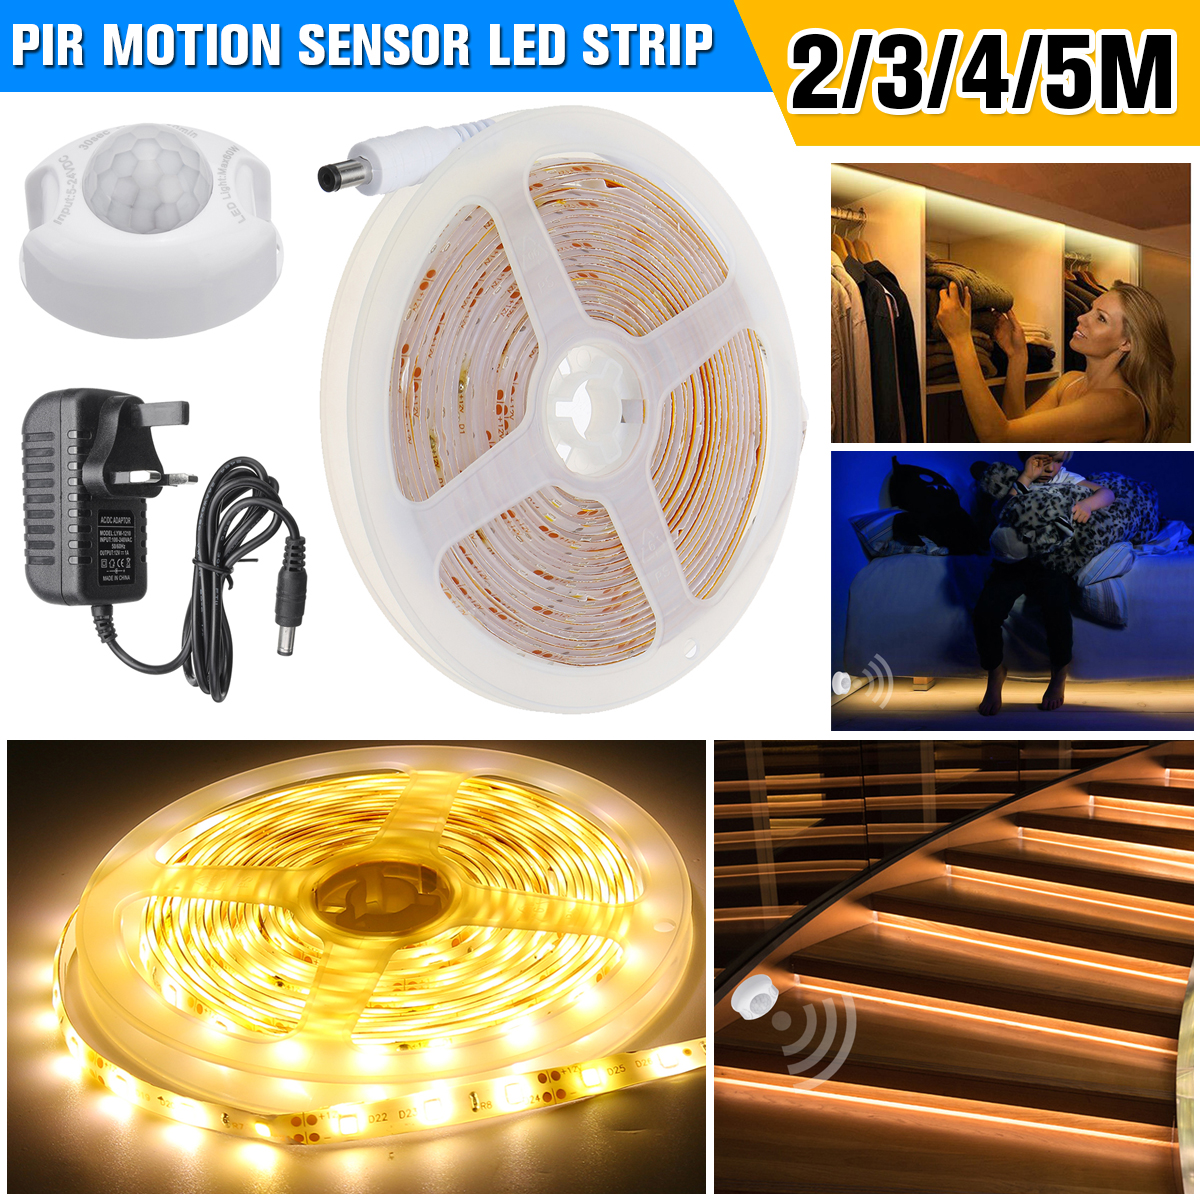 2M-3M-4M-5M-PIR-Motion-Sensor-LED-Strip-Lights-Wireless-Wardrobe-Closet-Night-Lamp-UK-Plug-1668164-1